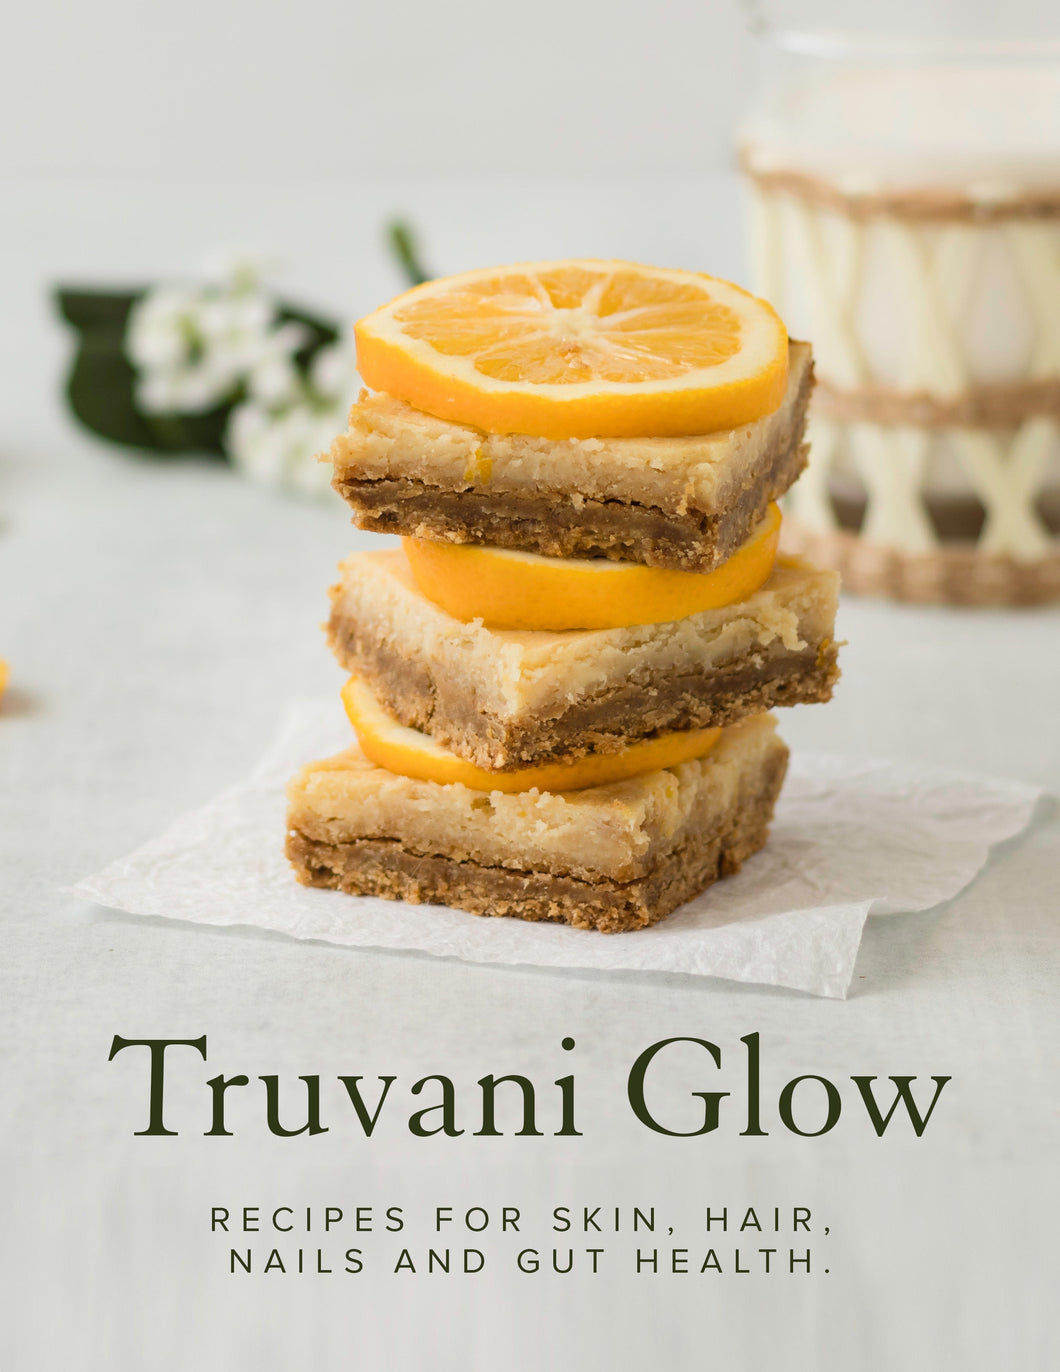 Truvani Morning Glow Recipe Guide ($10.00 value)